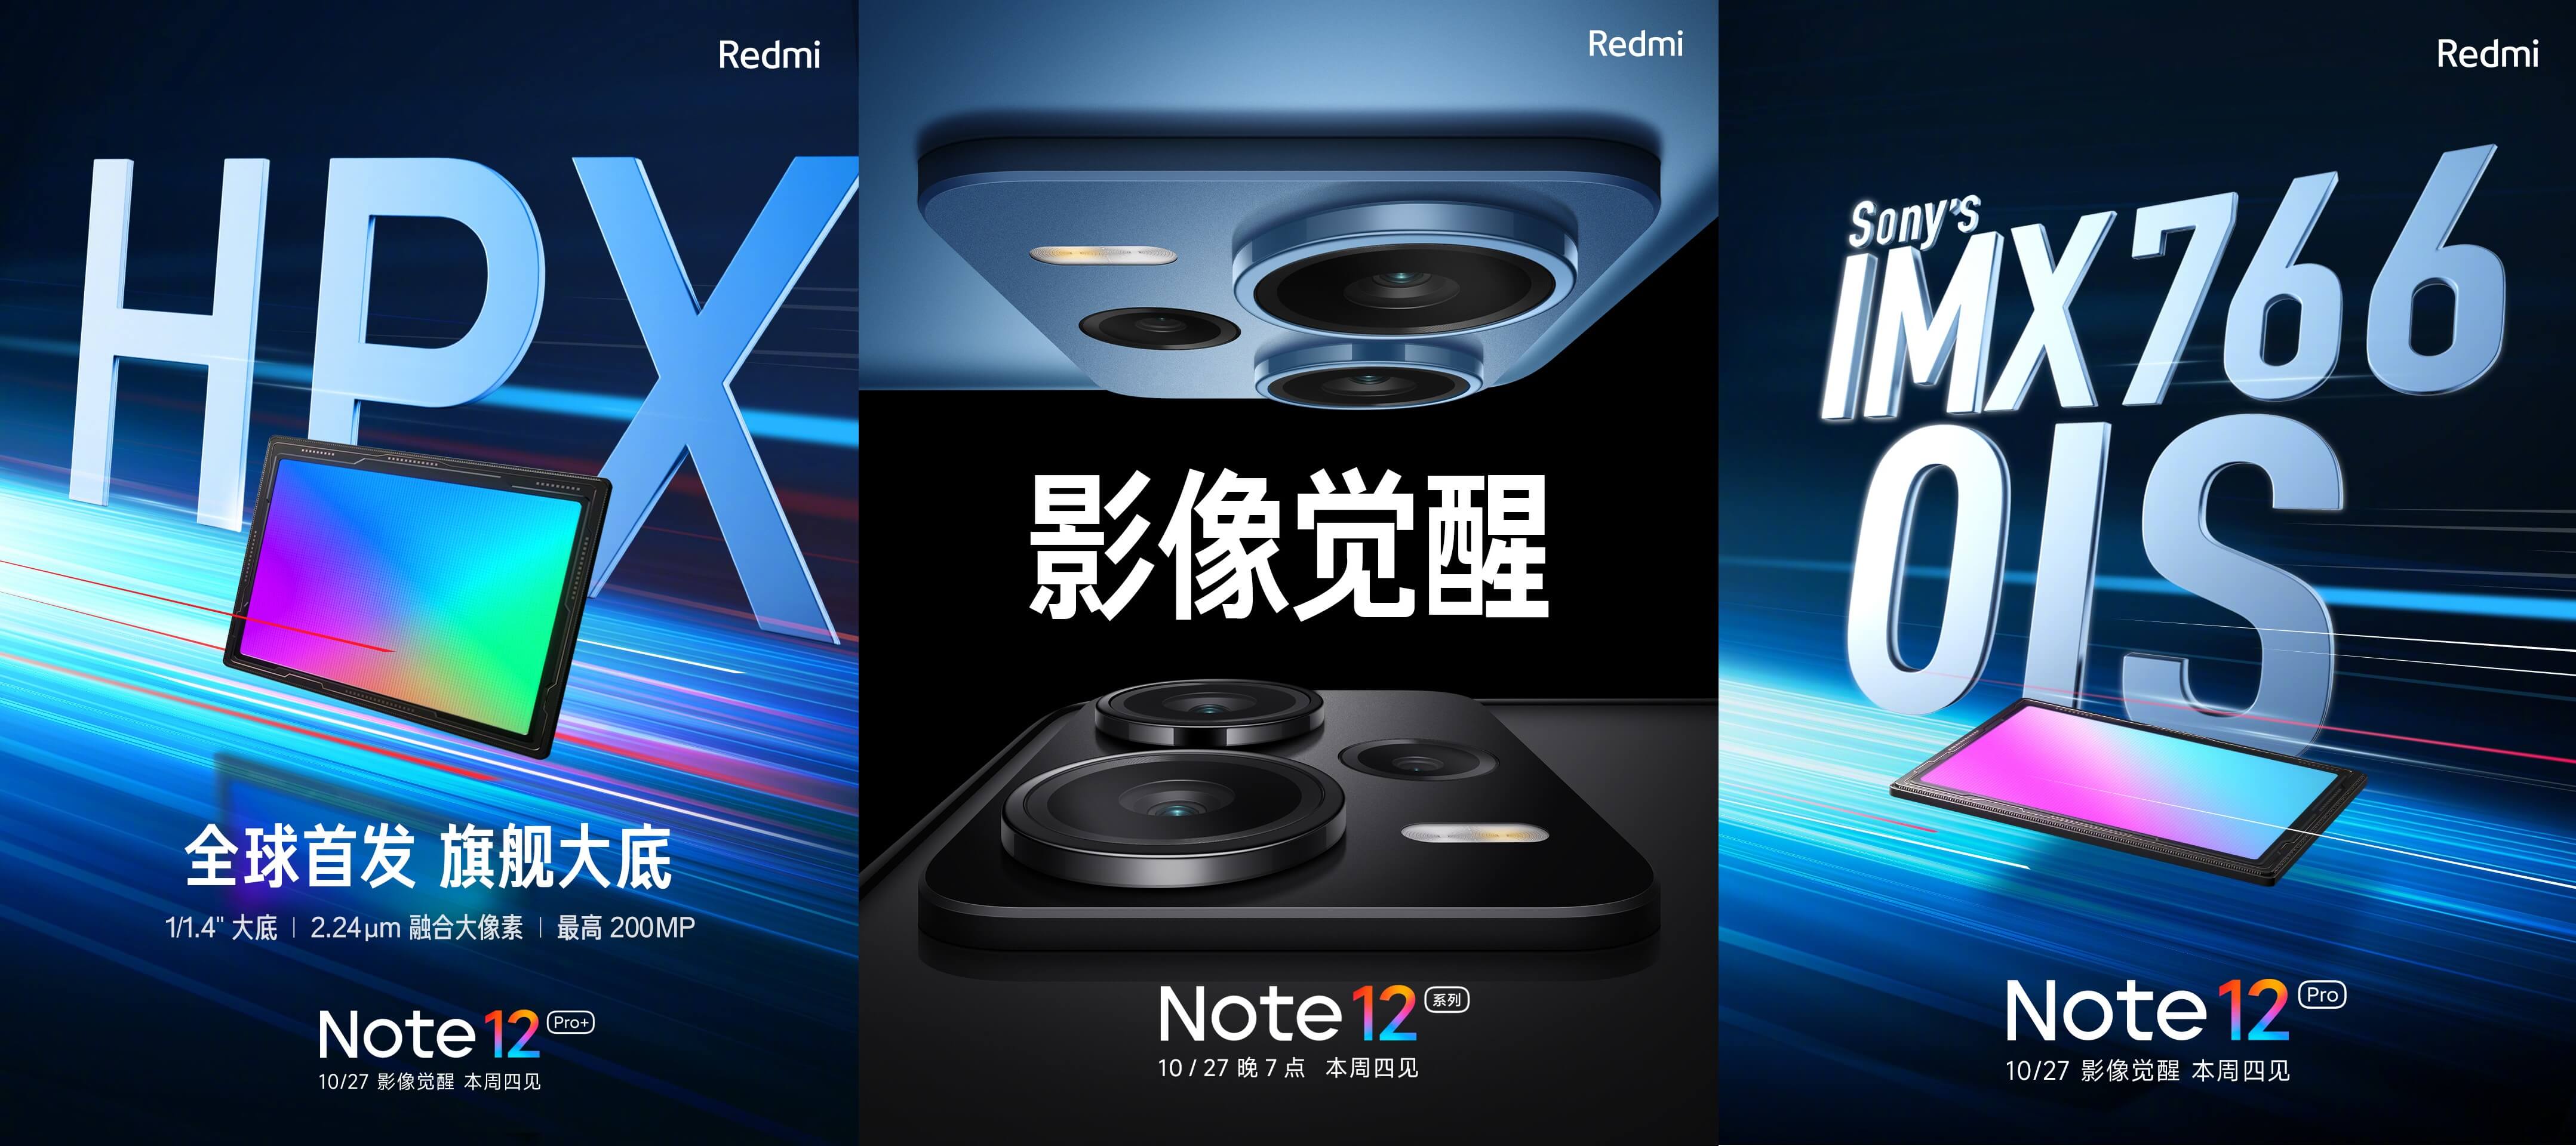 Redmi Note 12 series camera details cn